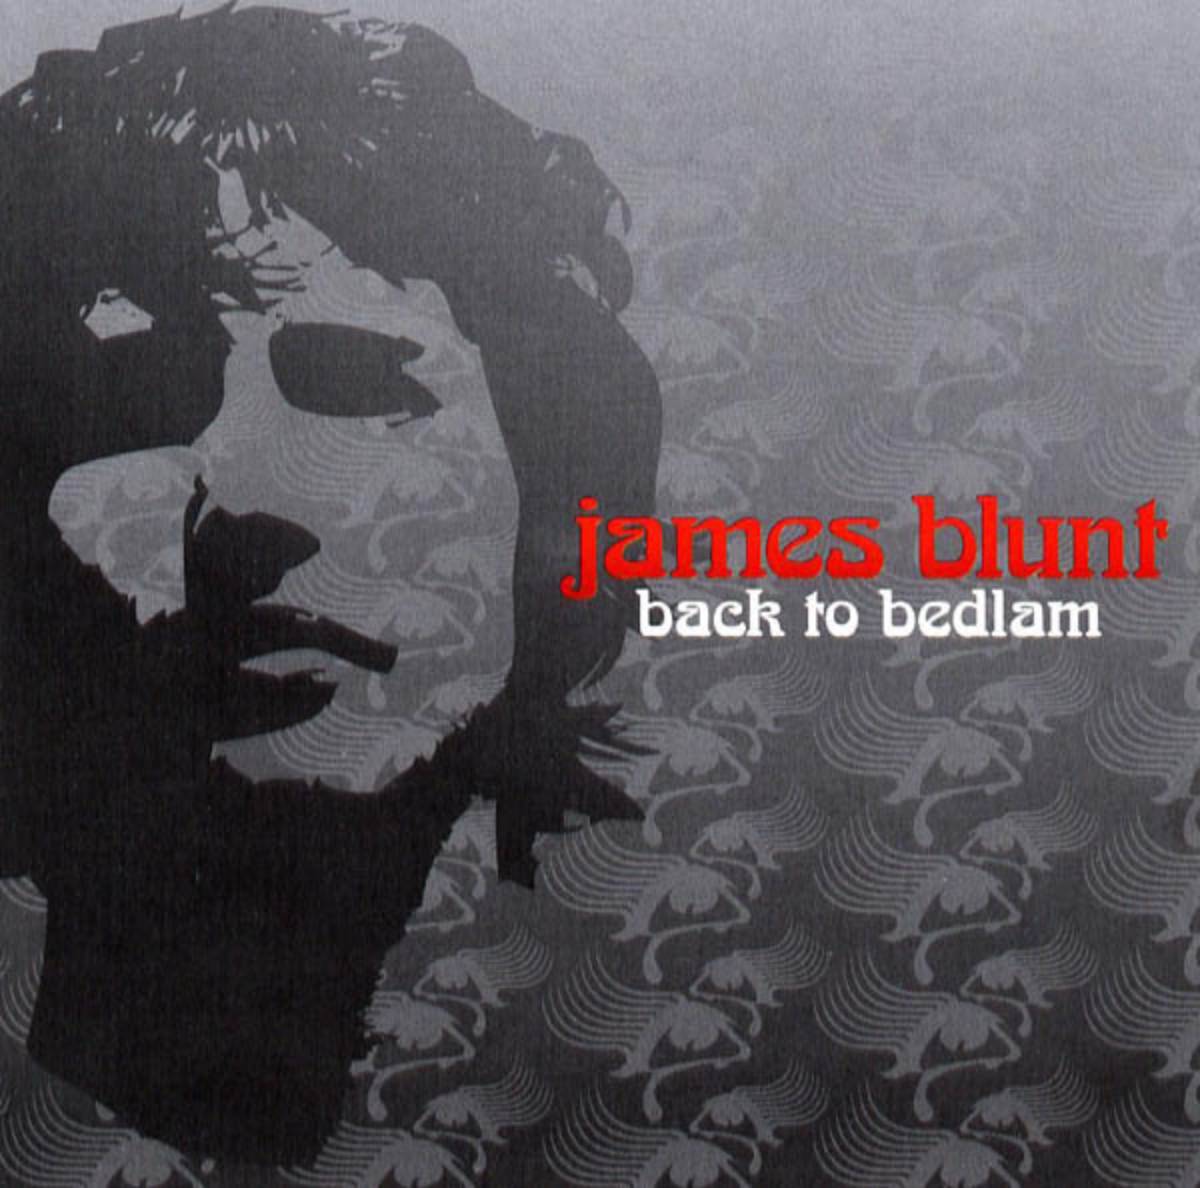 Альбом Back To Bedlam (2005) музыканта Джеймса Бланта